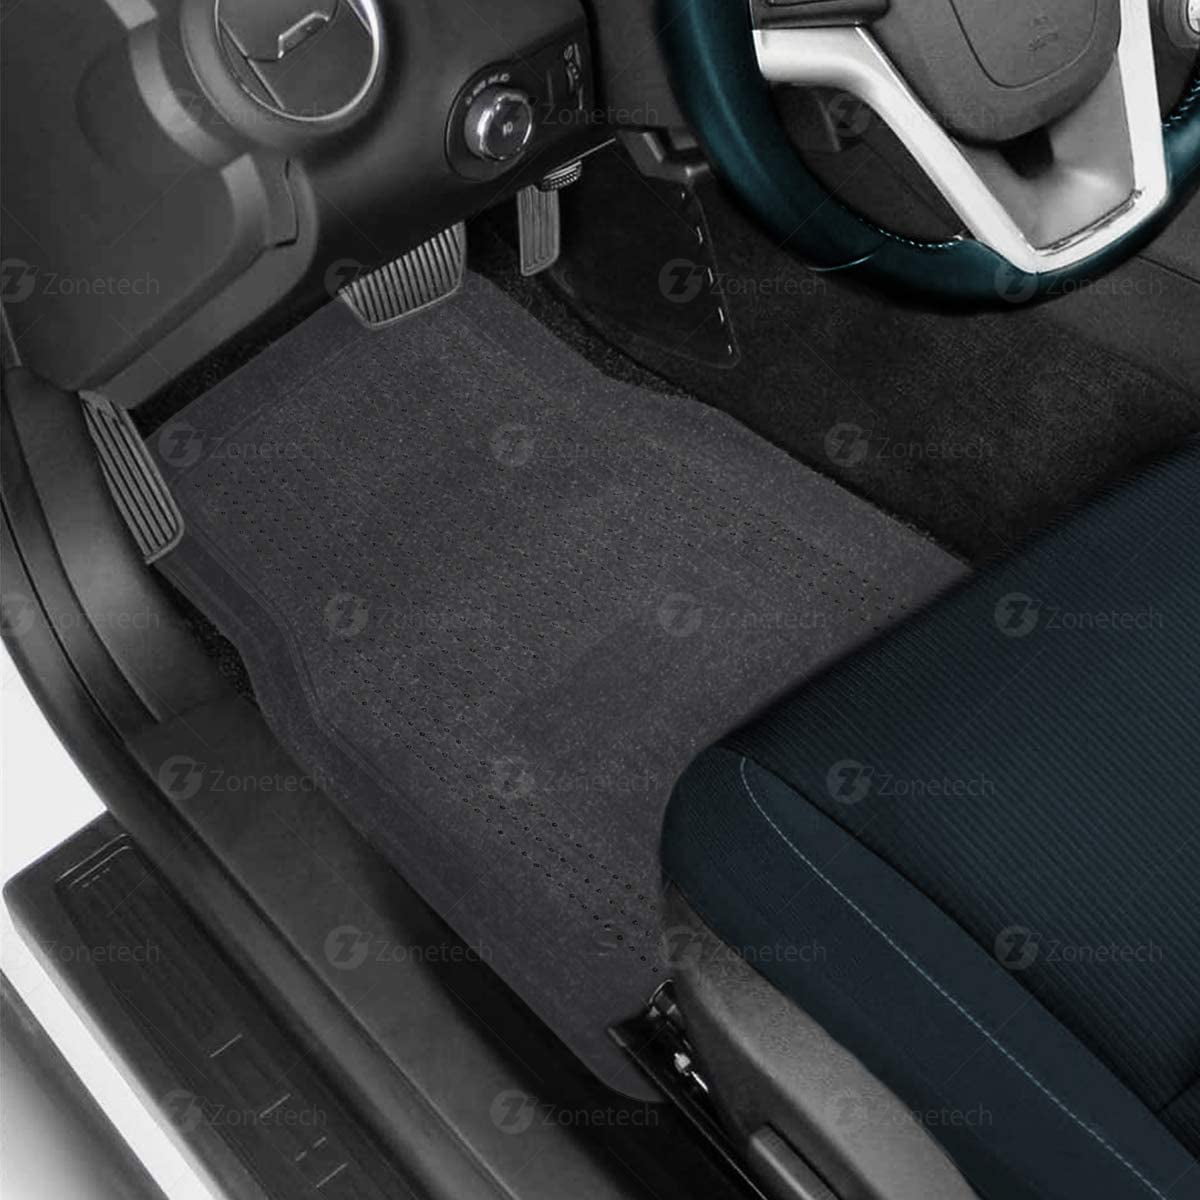 Zone Tech All Weather Rubber Car Interior Floor Mats 3-piece Trimmable  Waterproof Odorless Black Heavy Duty Interior Floor Mats Universal Fit :  Target